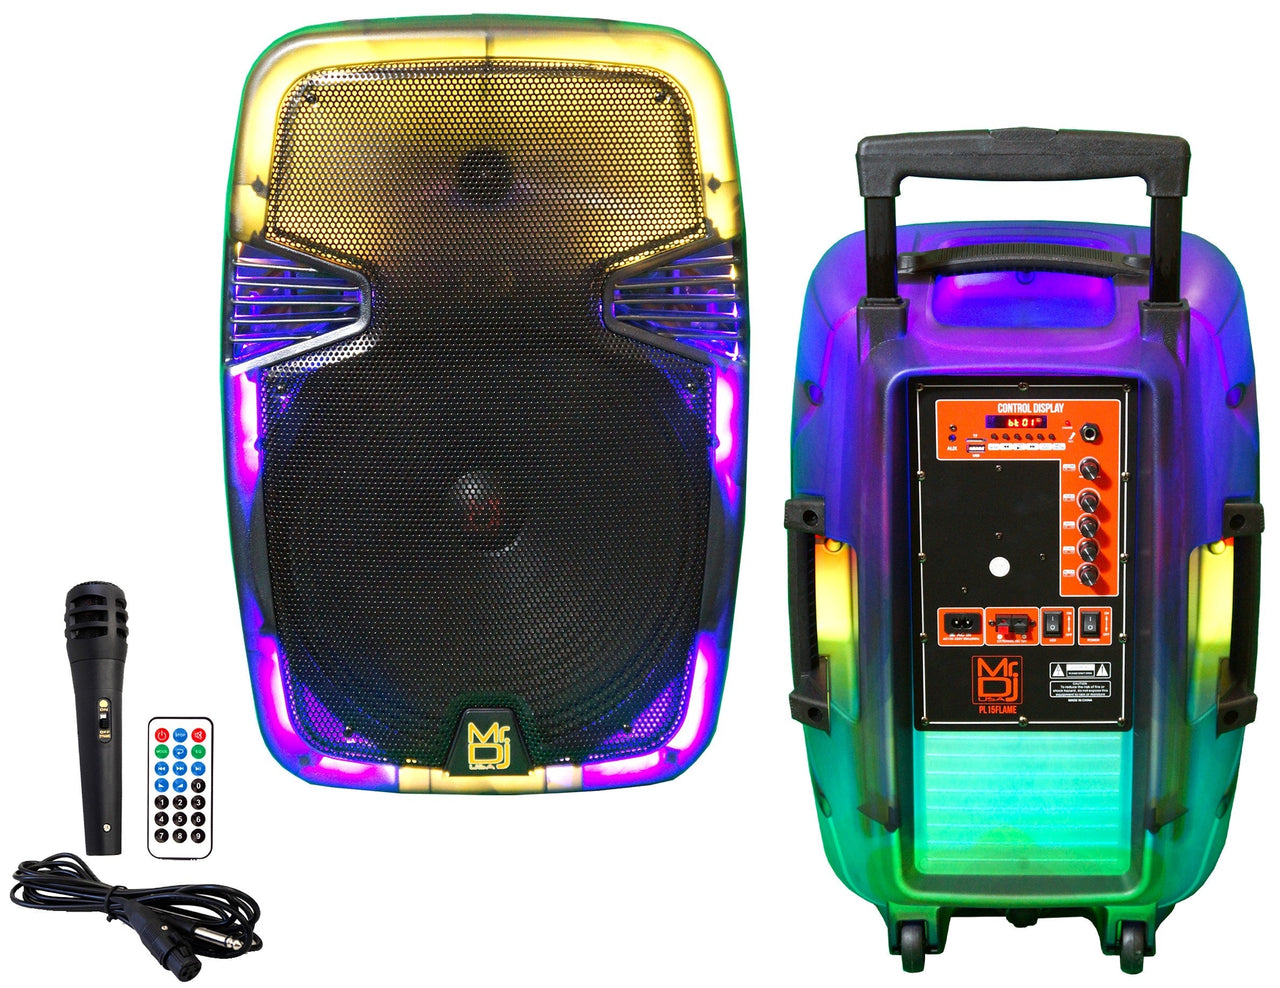 MR DJ PL15FLAME 15" Portable Translucent Bluetooth Speaker + Speaker Stand + LED Crystal Magic Ball